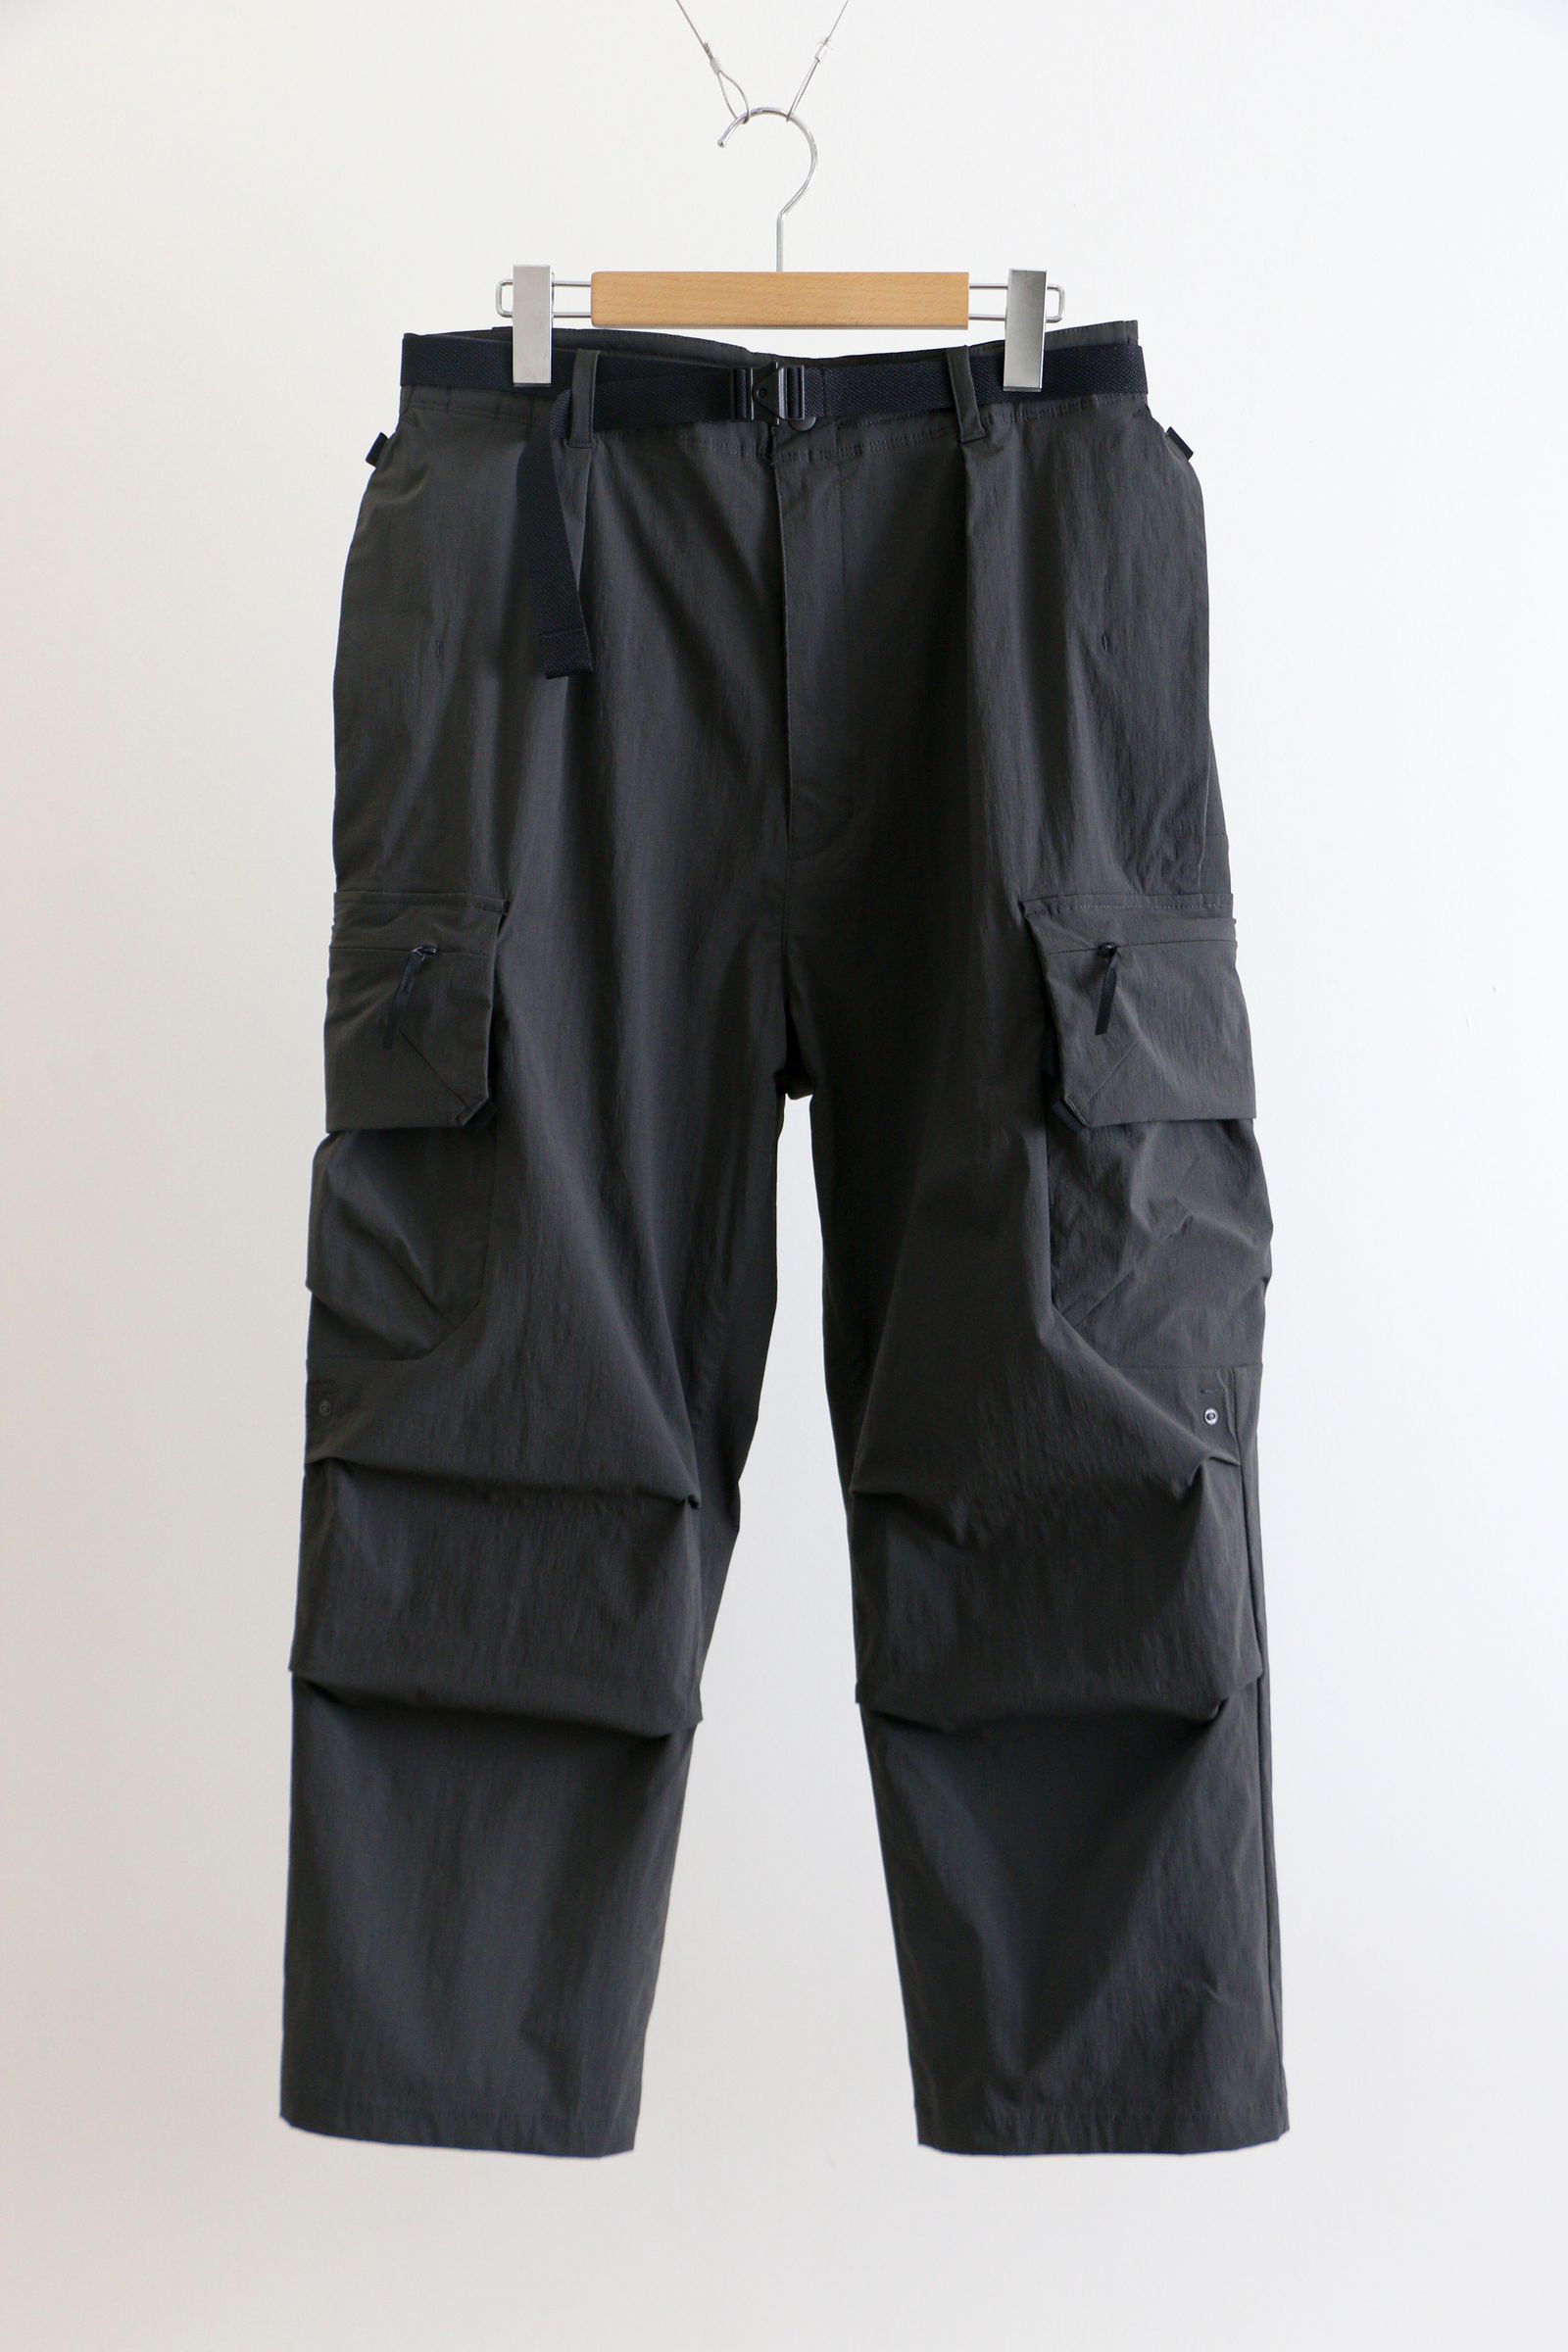 alk phenix - Cargo Pants KAR / karu-stretch taffeta II / OFF BLACK